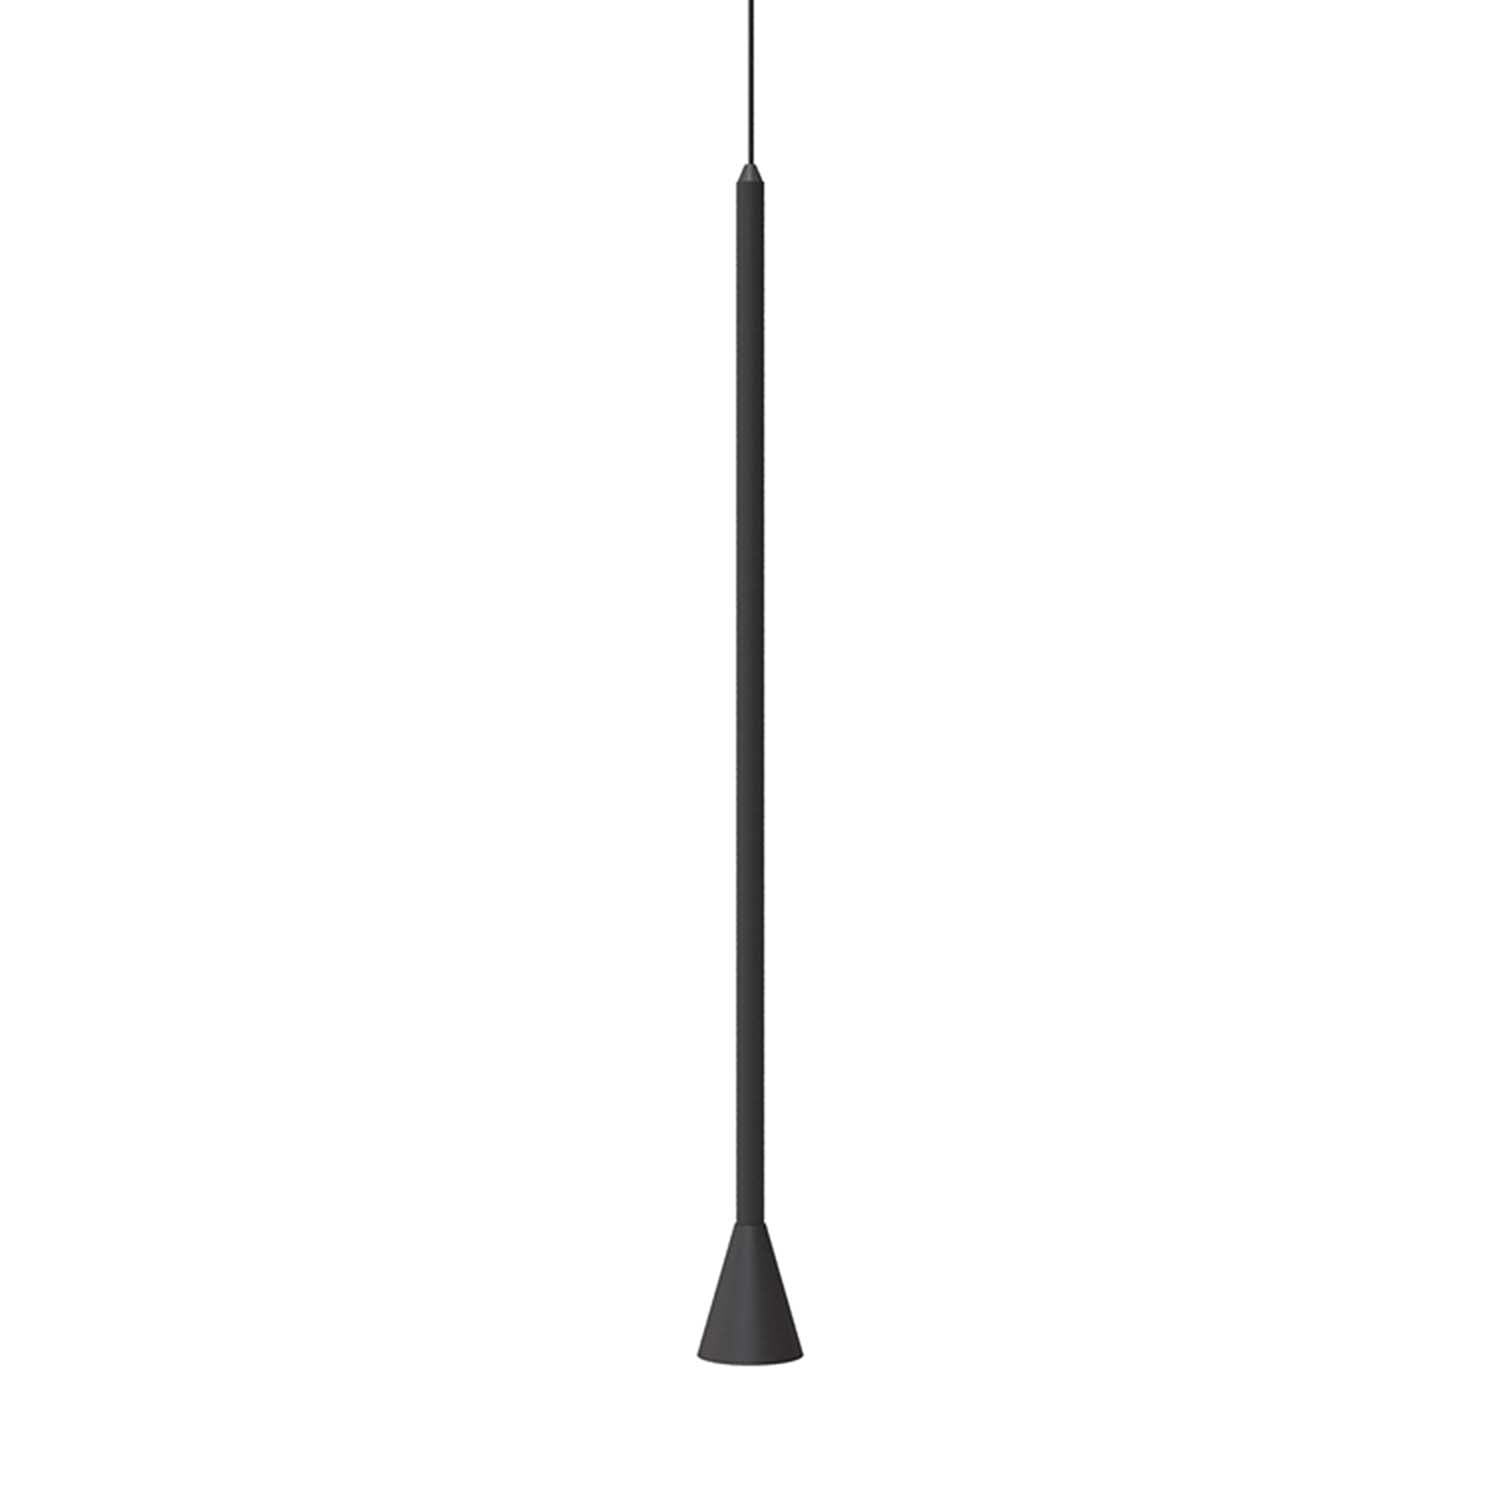 ARROW - Flute minimalist pendant lamp for kitchen island